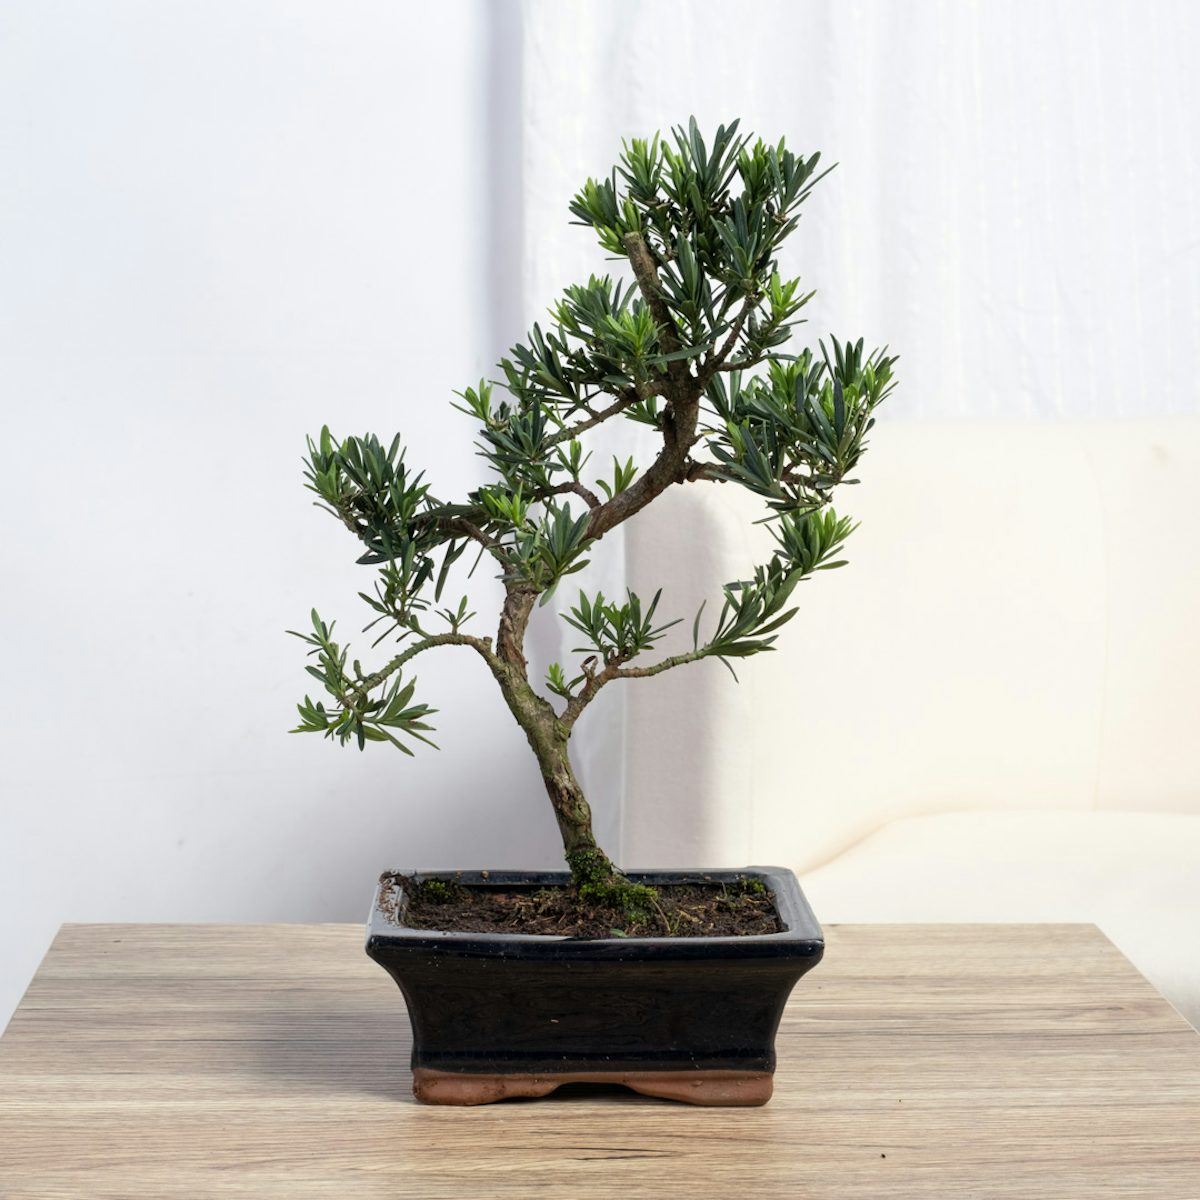 Bonsai 7 years old Podocarpus macrophyllus